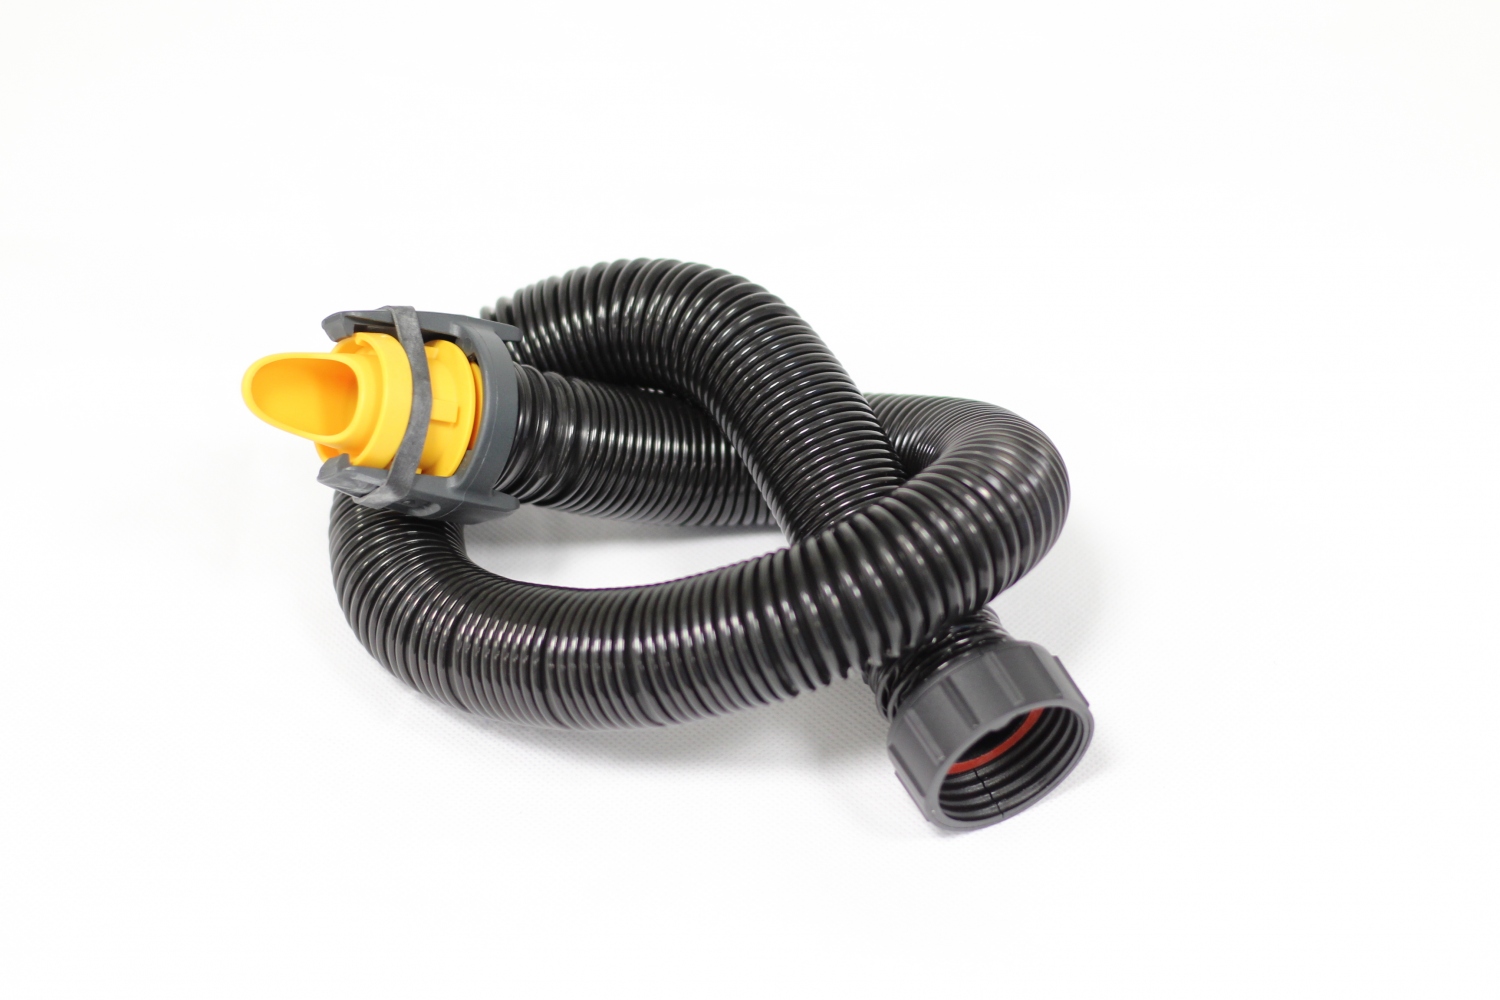 pics/Scott-safety/maximask/pu-flexible-hose-connector-maximask-to-proflow-duraflow-air-respirator.jpg